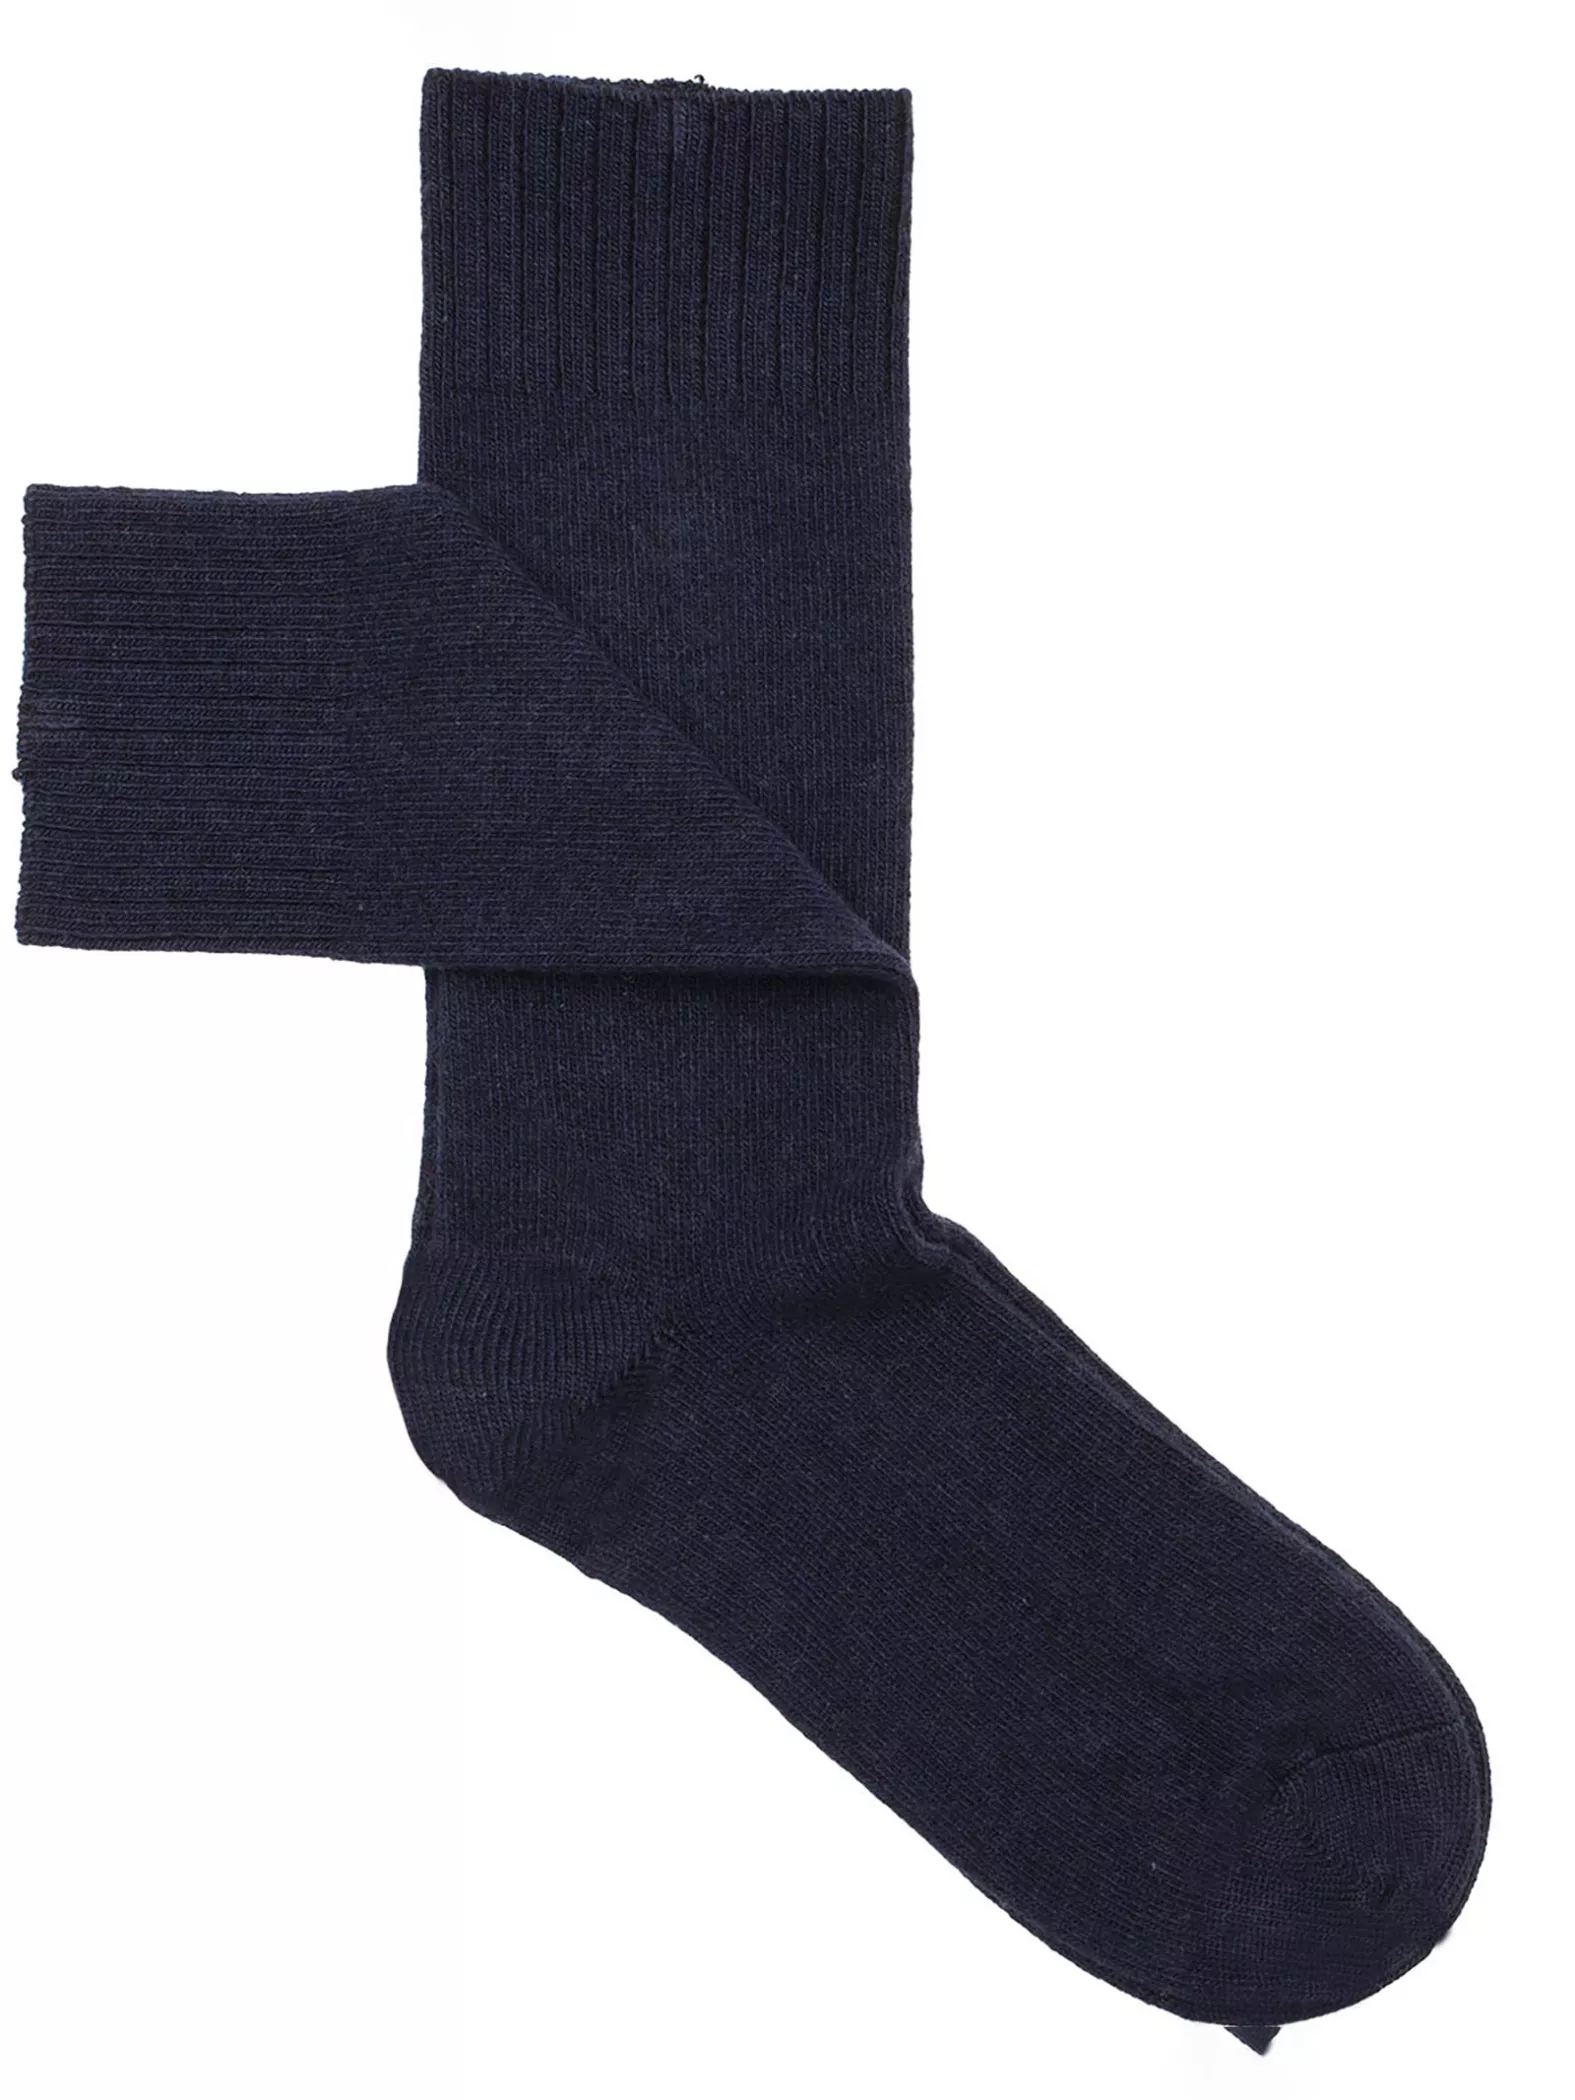 Plain Cashmere Man's Short Socks